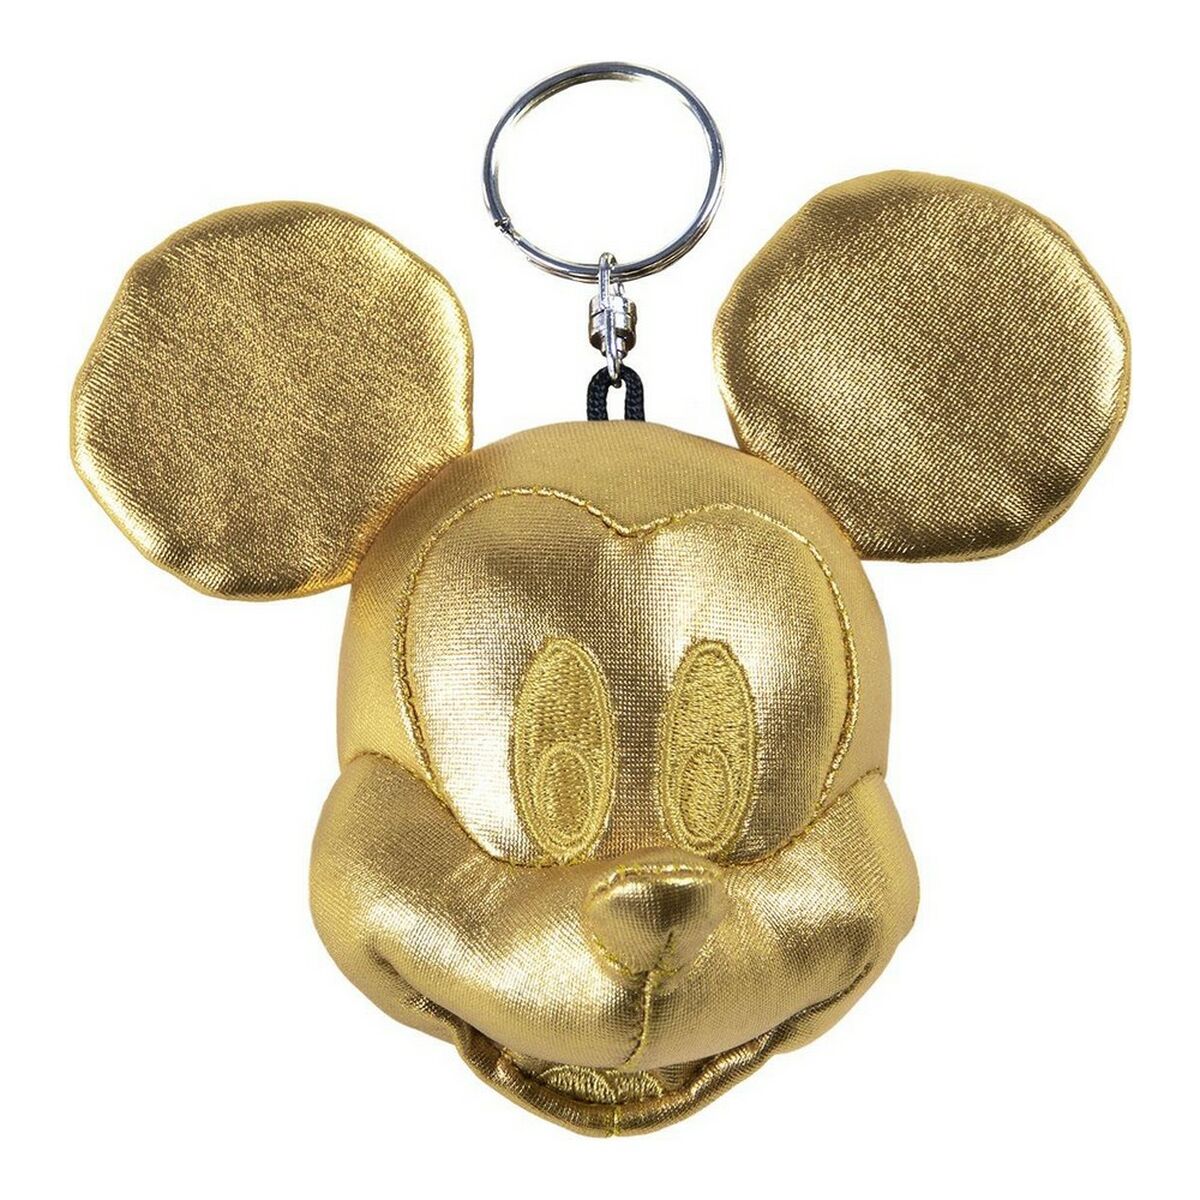 Plüschtier Schlüsselanhänger Mickey Mouse 2600001190 Gold